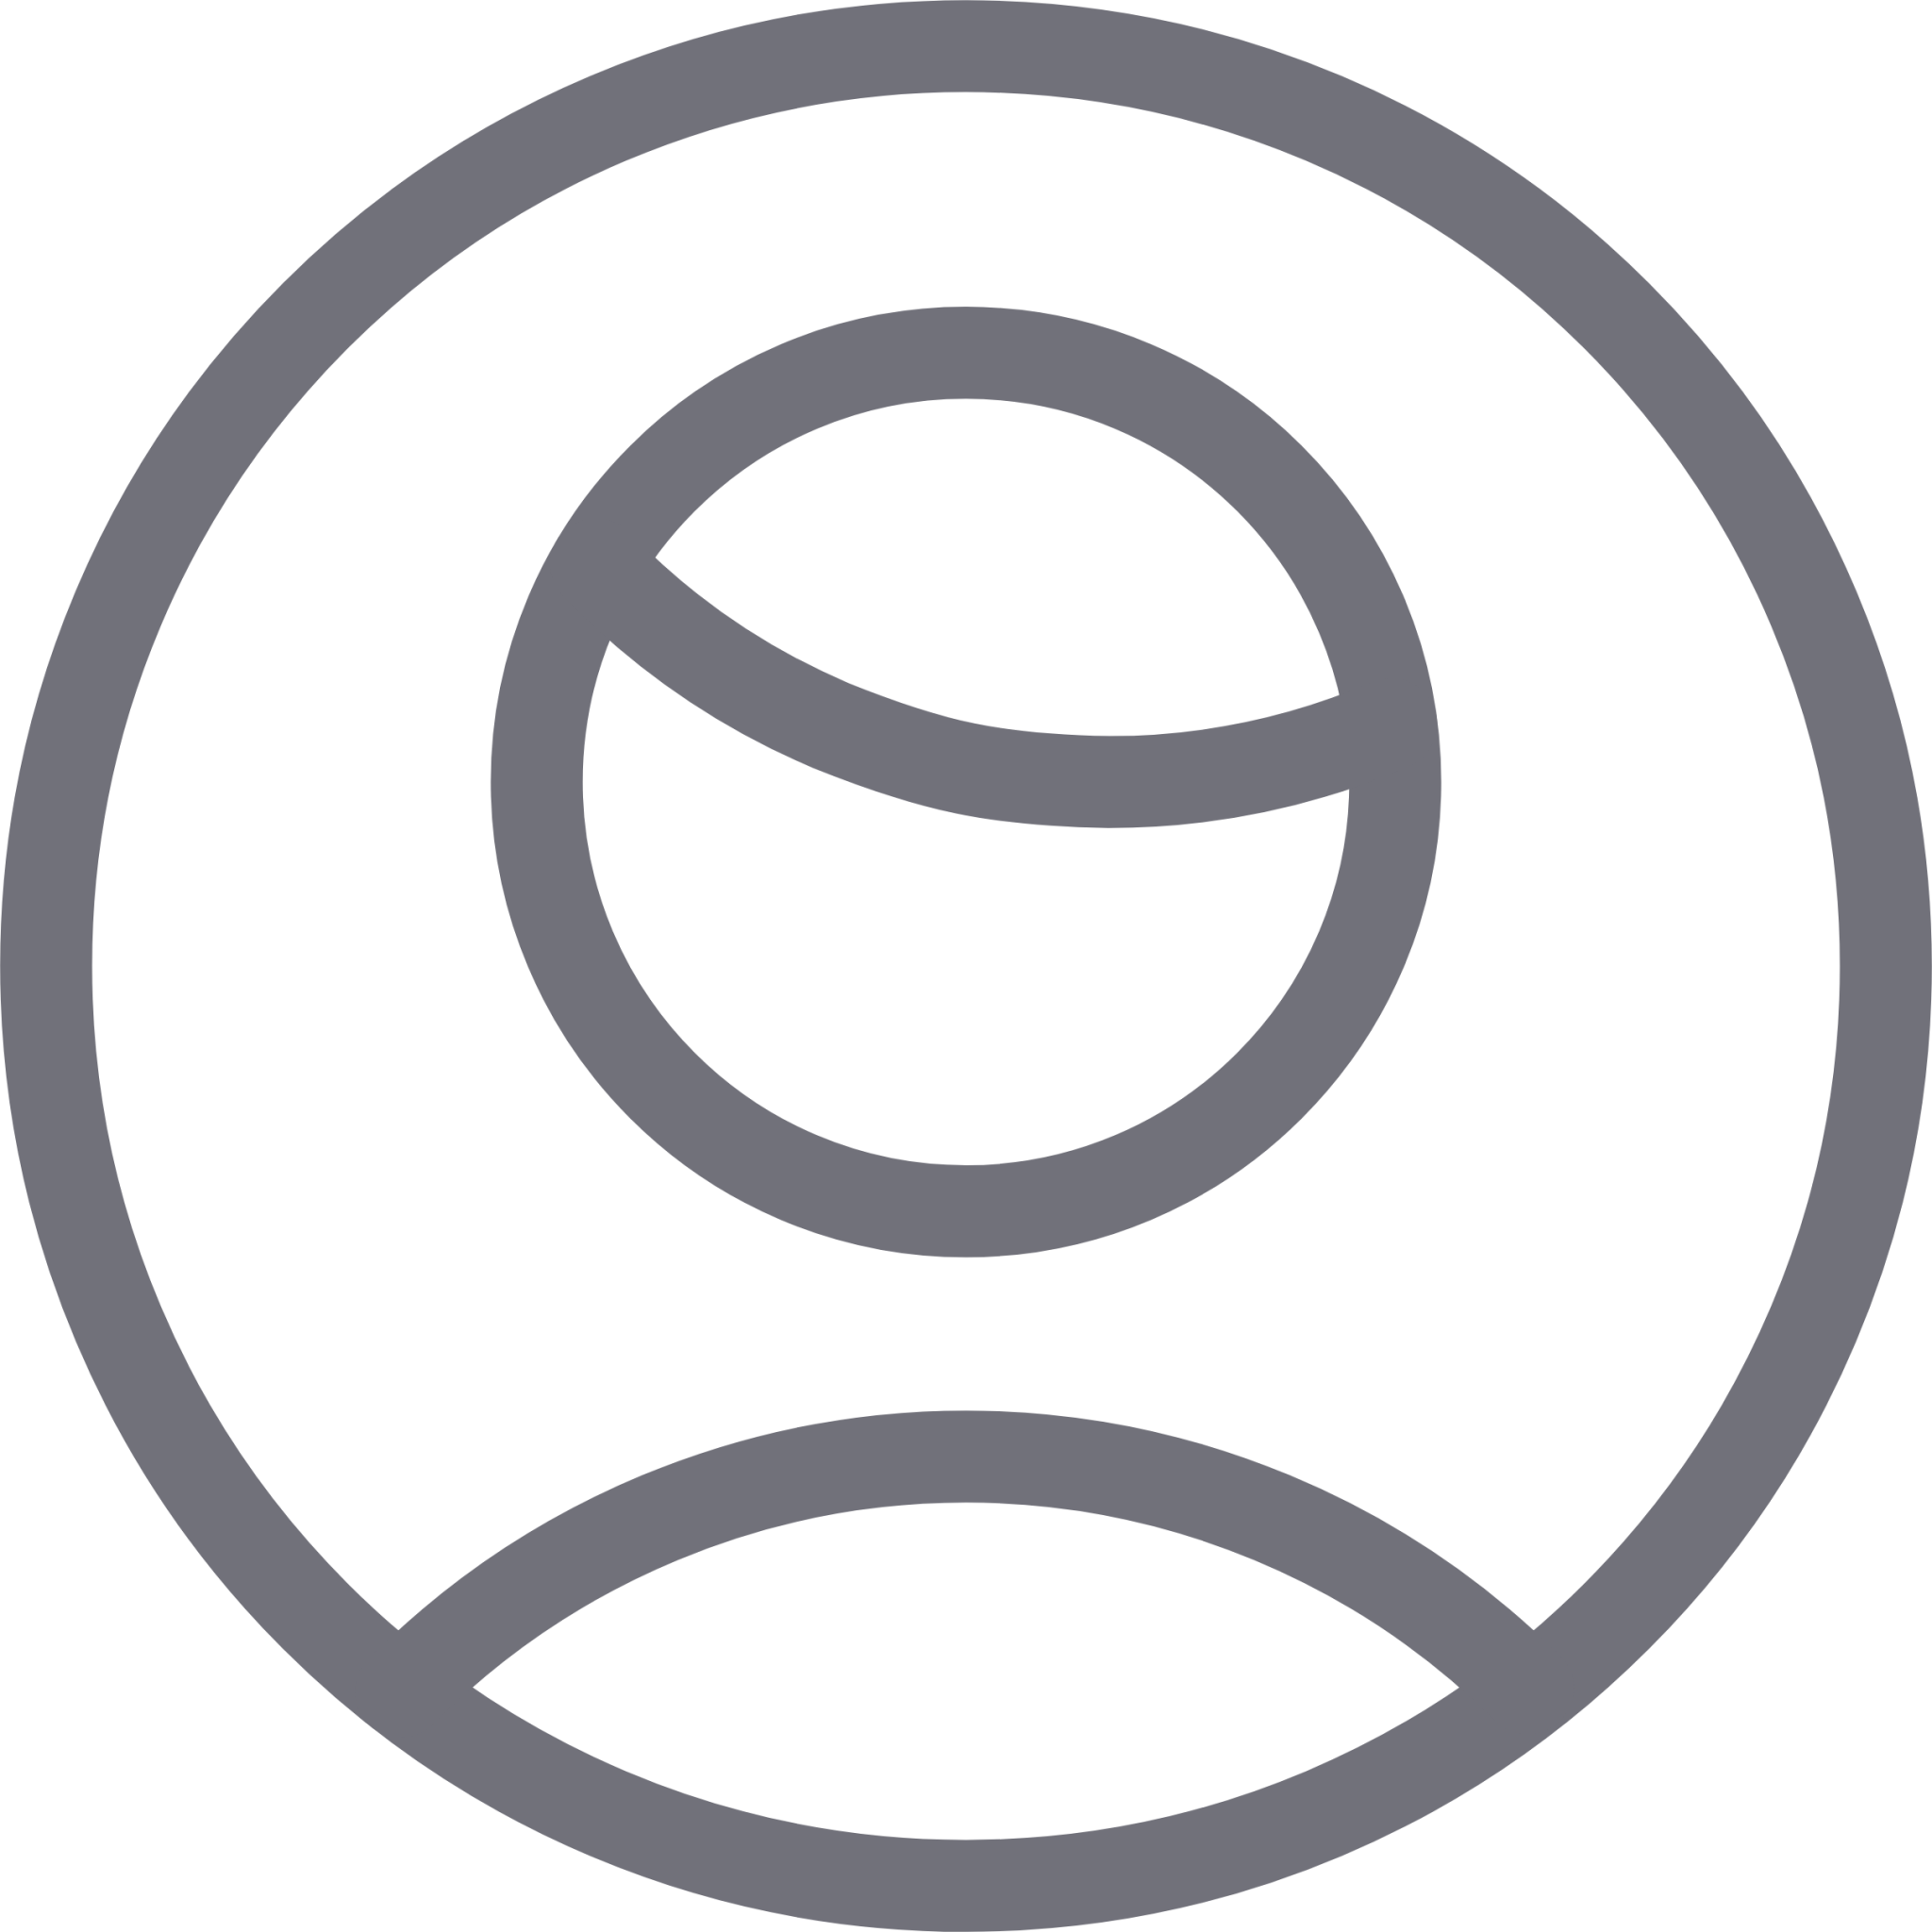 circle user icon